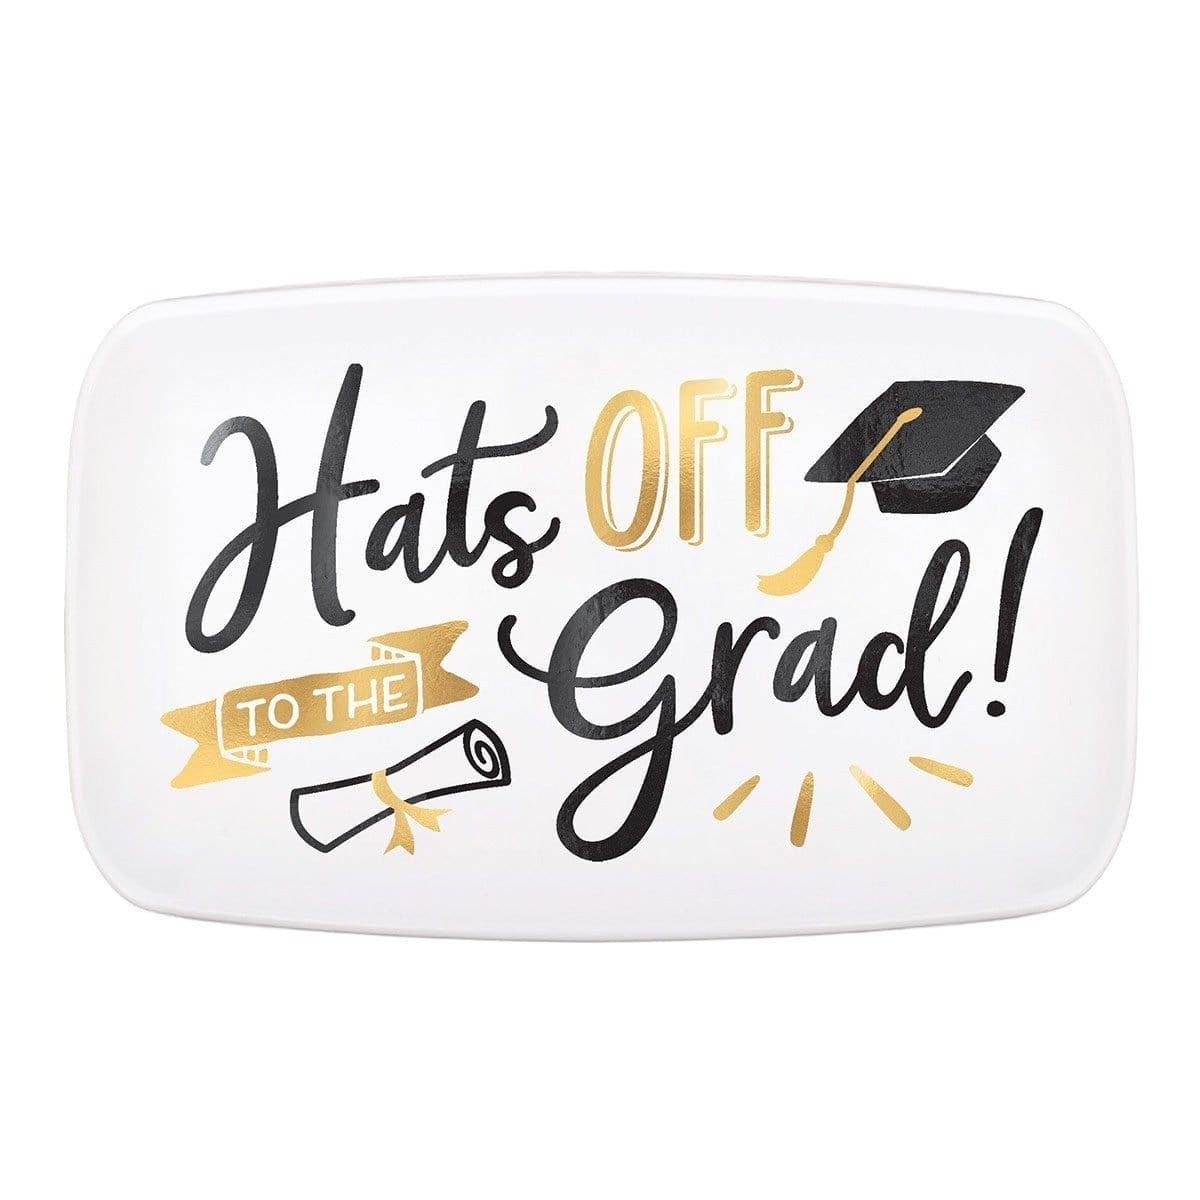 Buy Graduation Grad Hats Off - Rectangular Platter sold at Party Expert